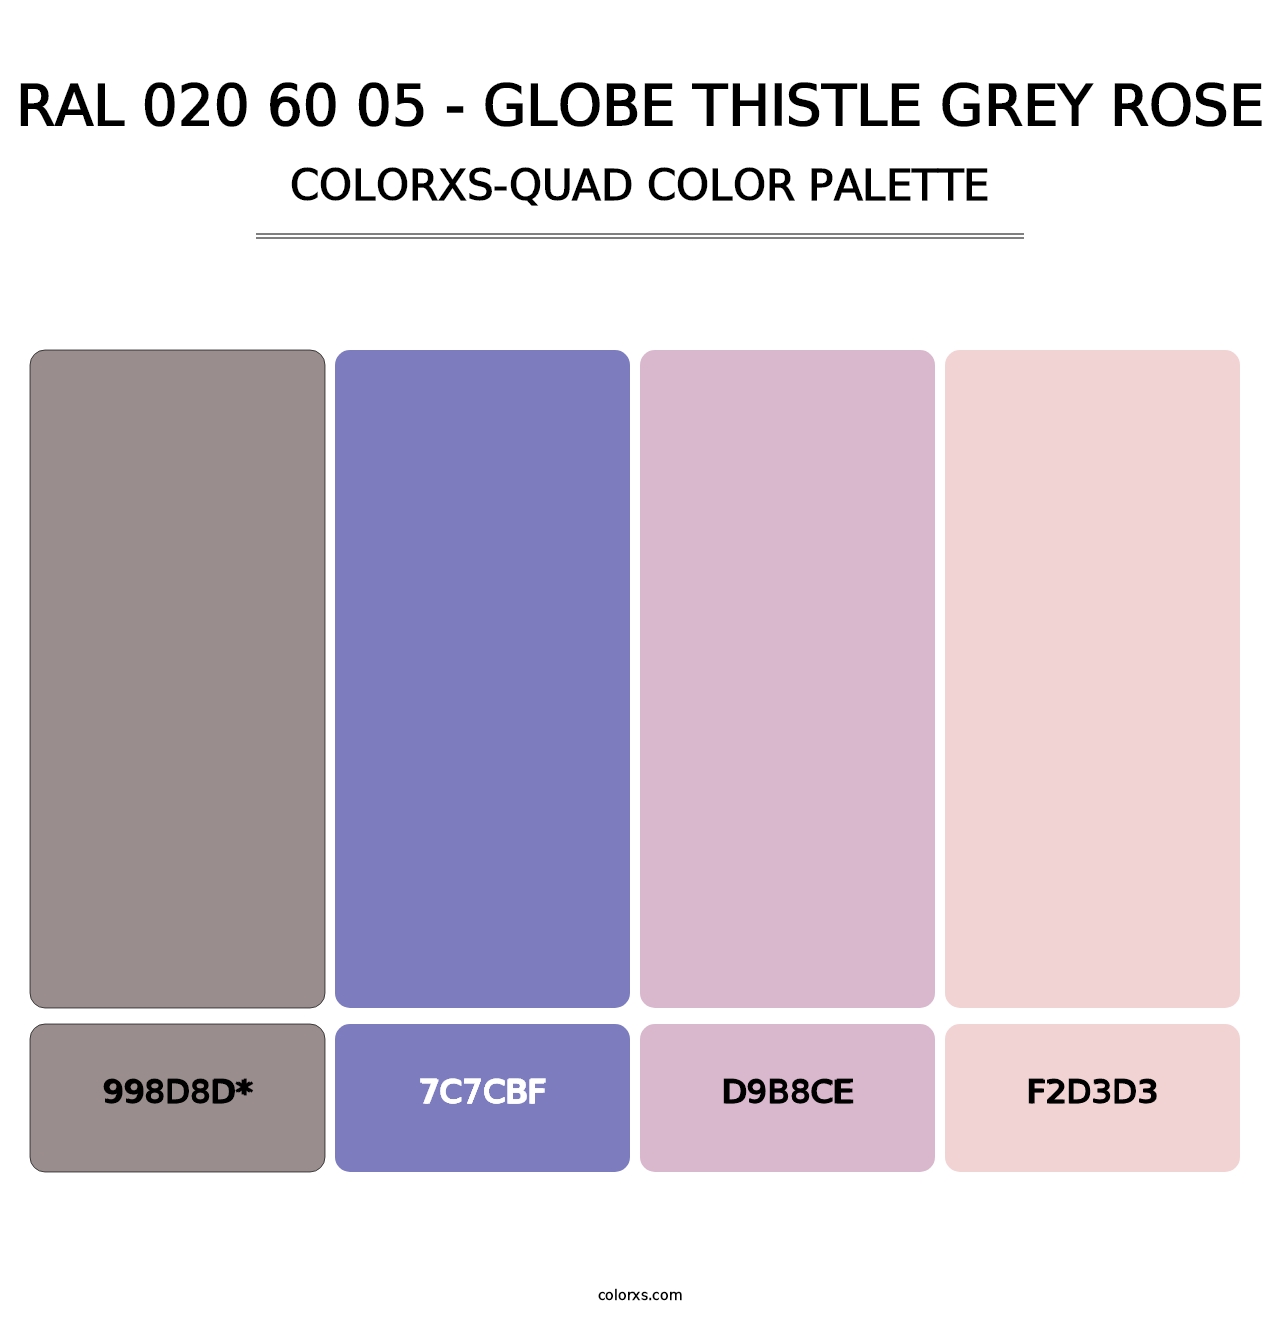 RAL 020 60 05 - Globe Thistle Grey Rose - Colorxs Quad Palette